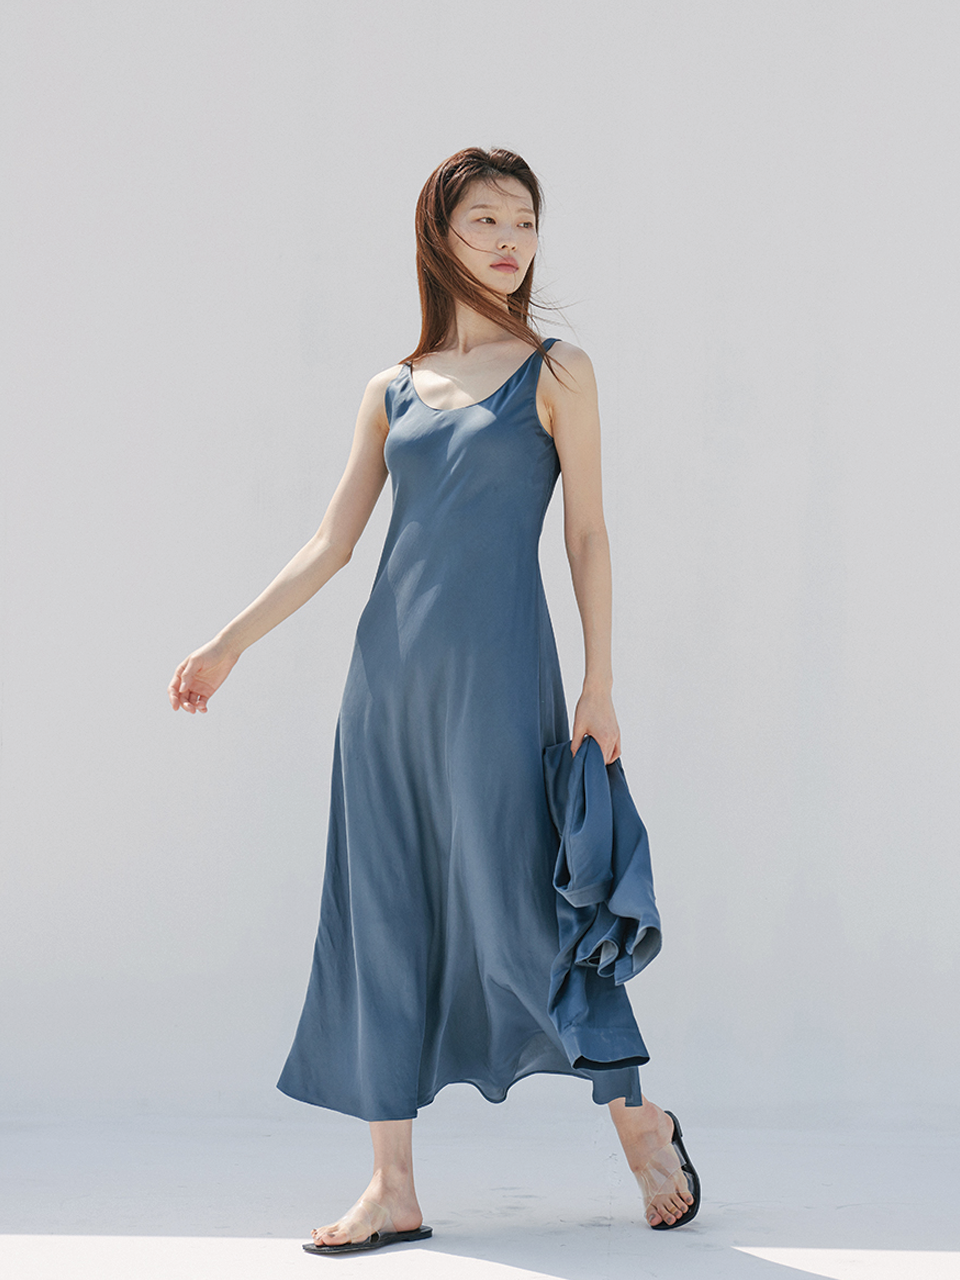 Glisser Slip Dress - Teal Blue 글리쎄 슬립드레스 틸블루